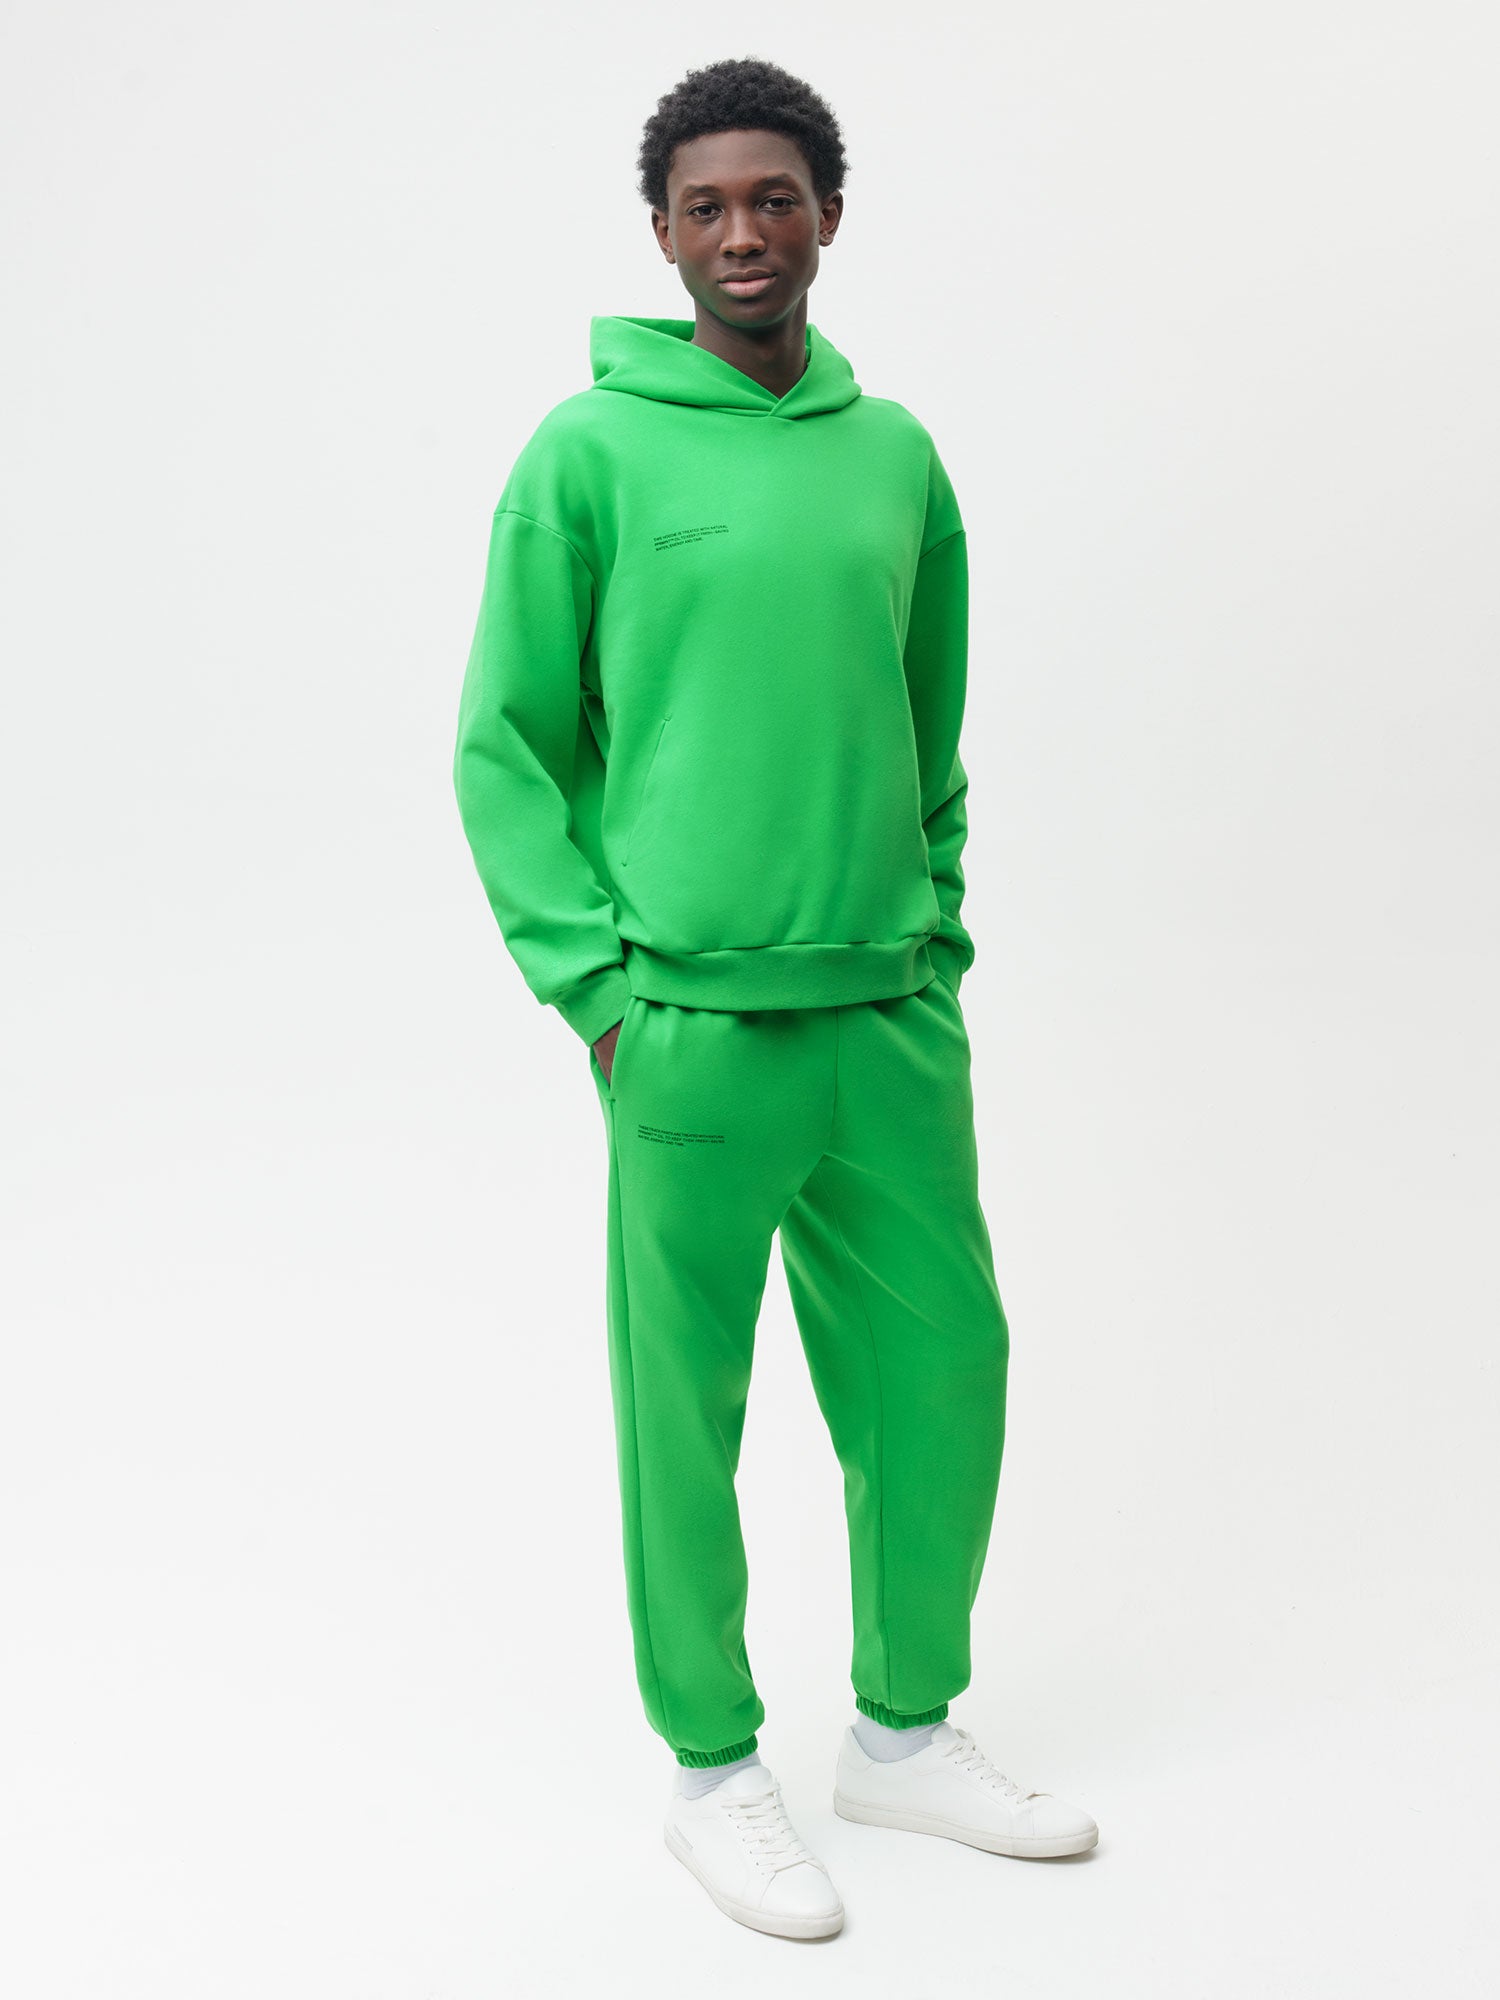 Green - Track Pants